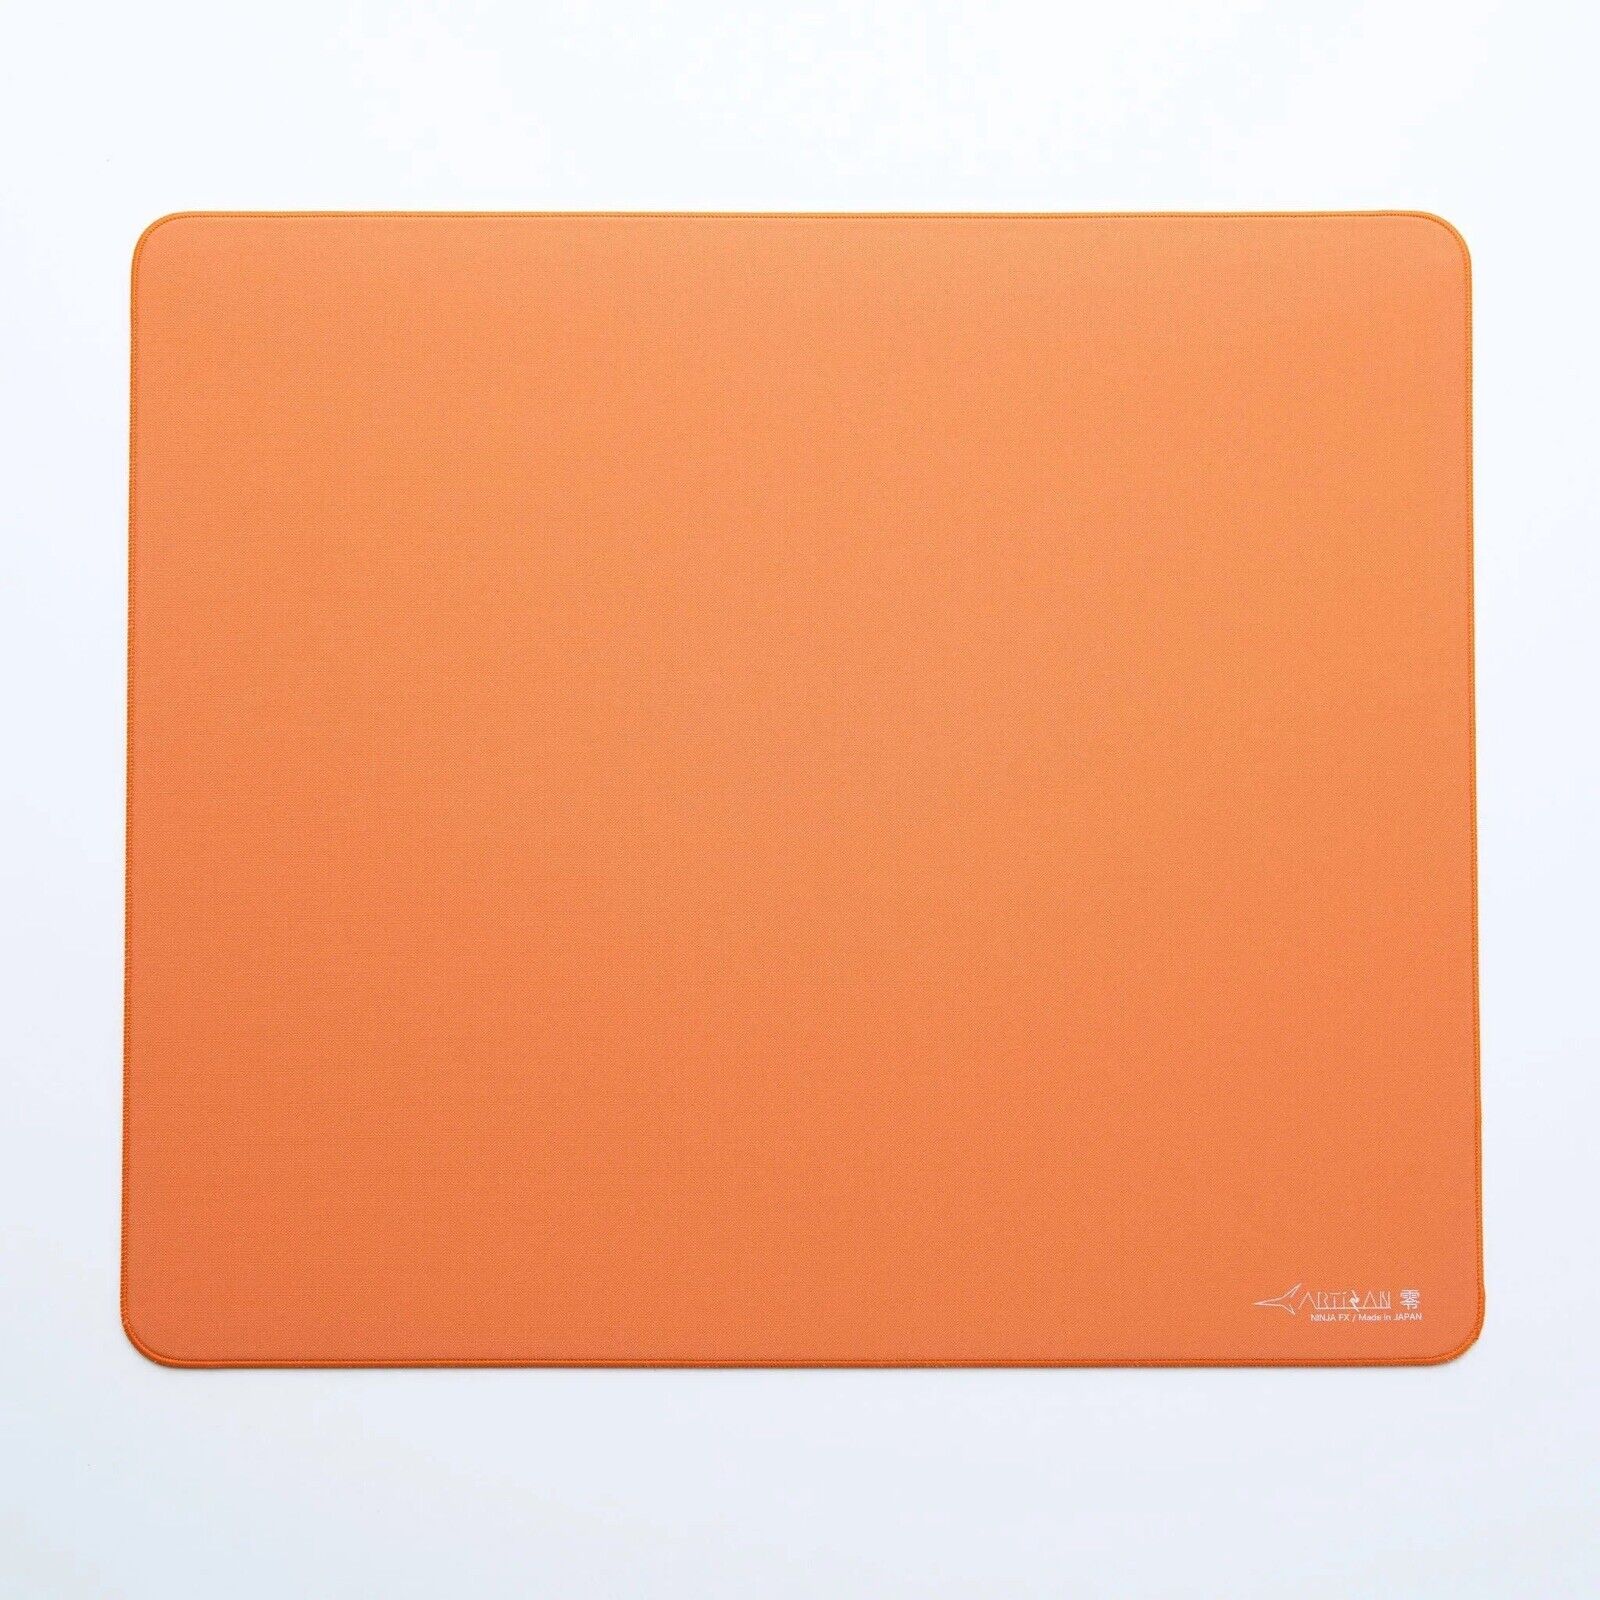 ARTISAN NINJA FX ZERO XL XSoft, Daidai Orange, Gaming Mouse Pad - USA Shipped